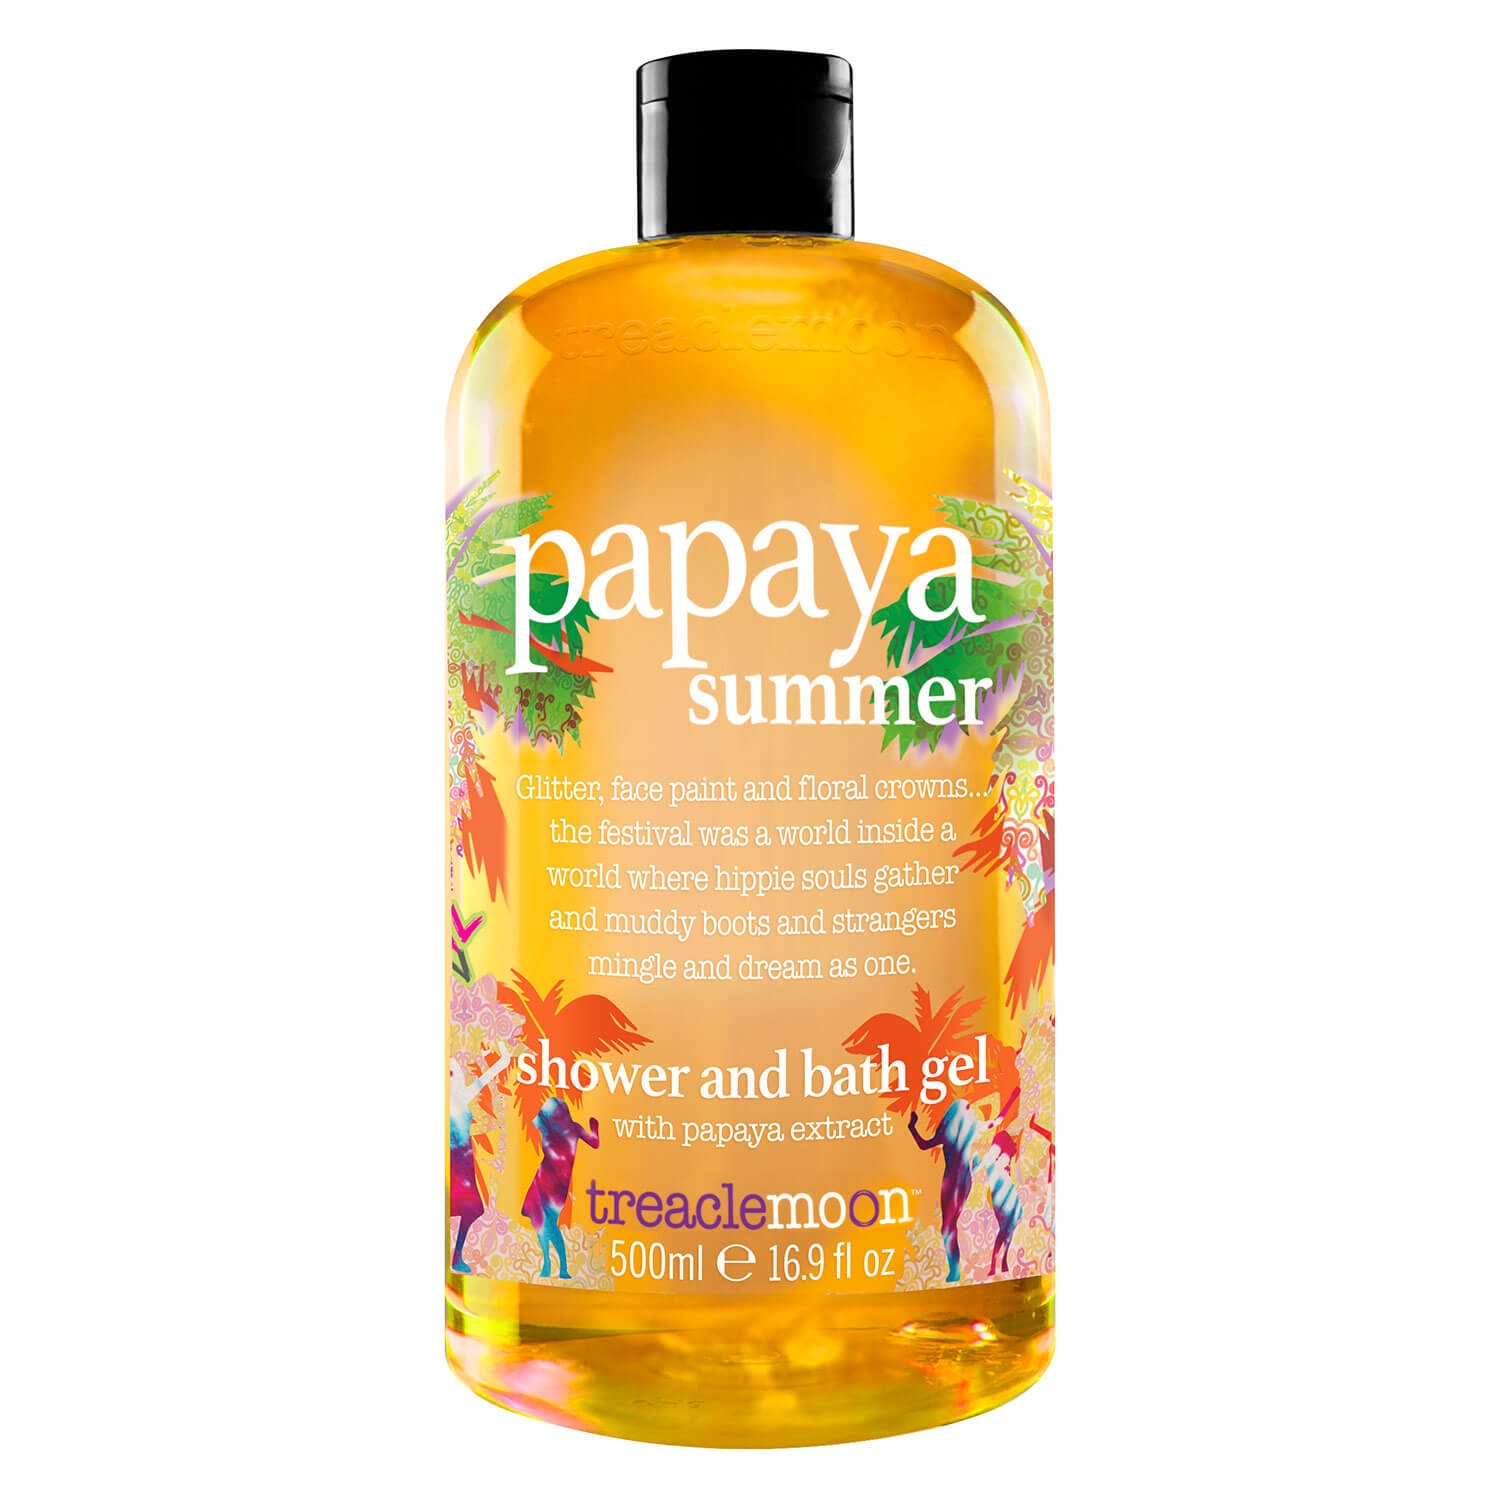 Product image from treaclemoon - papaya summer shower and bath gel